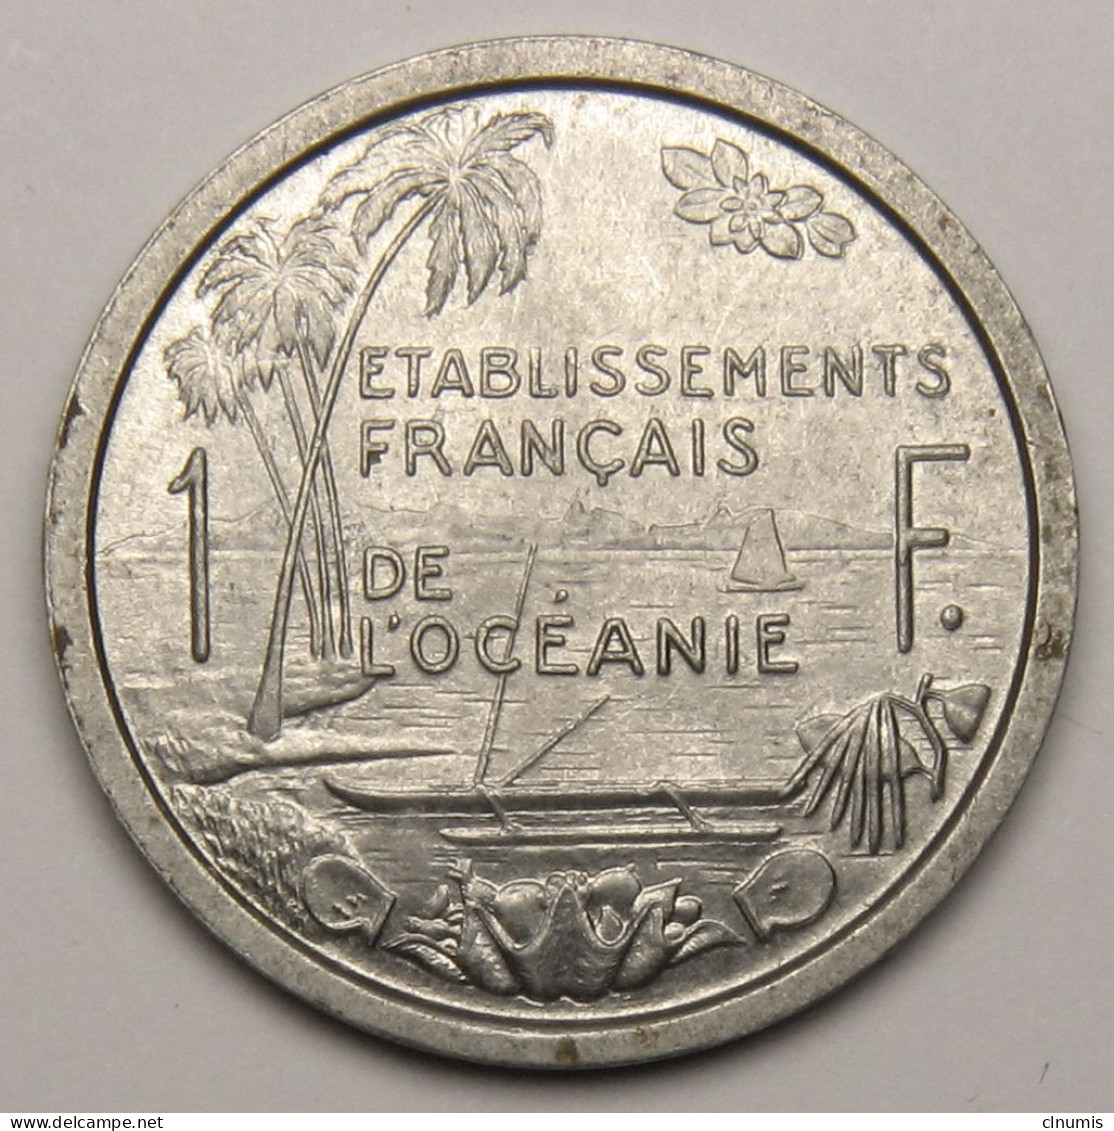 Océanie Française, 1 Franc Union Française, 1949 - Polynésie Française